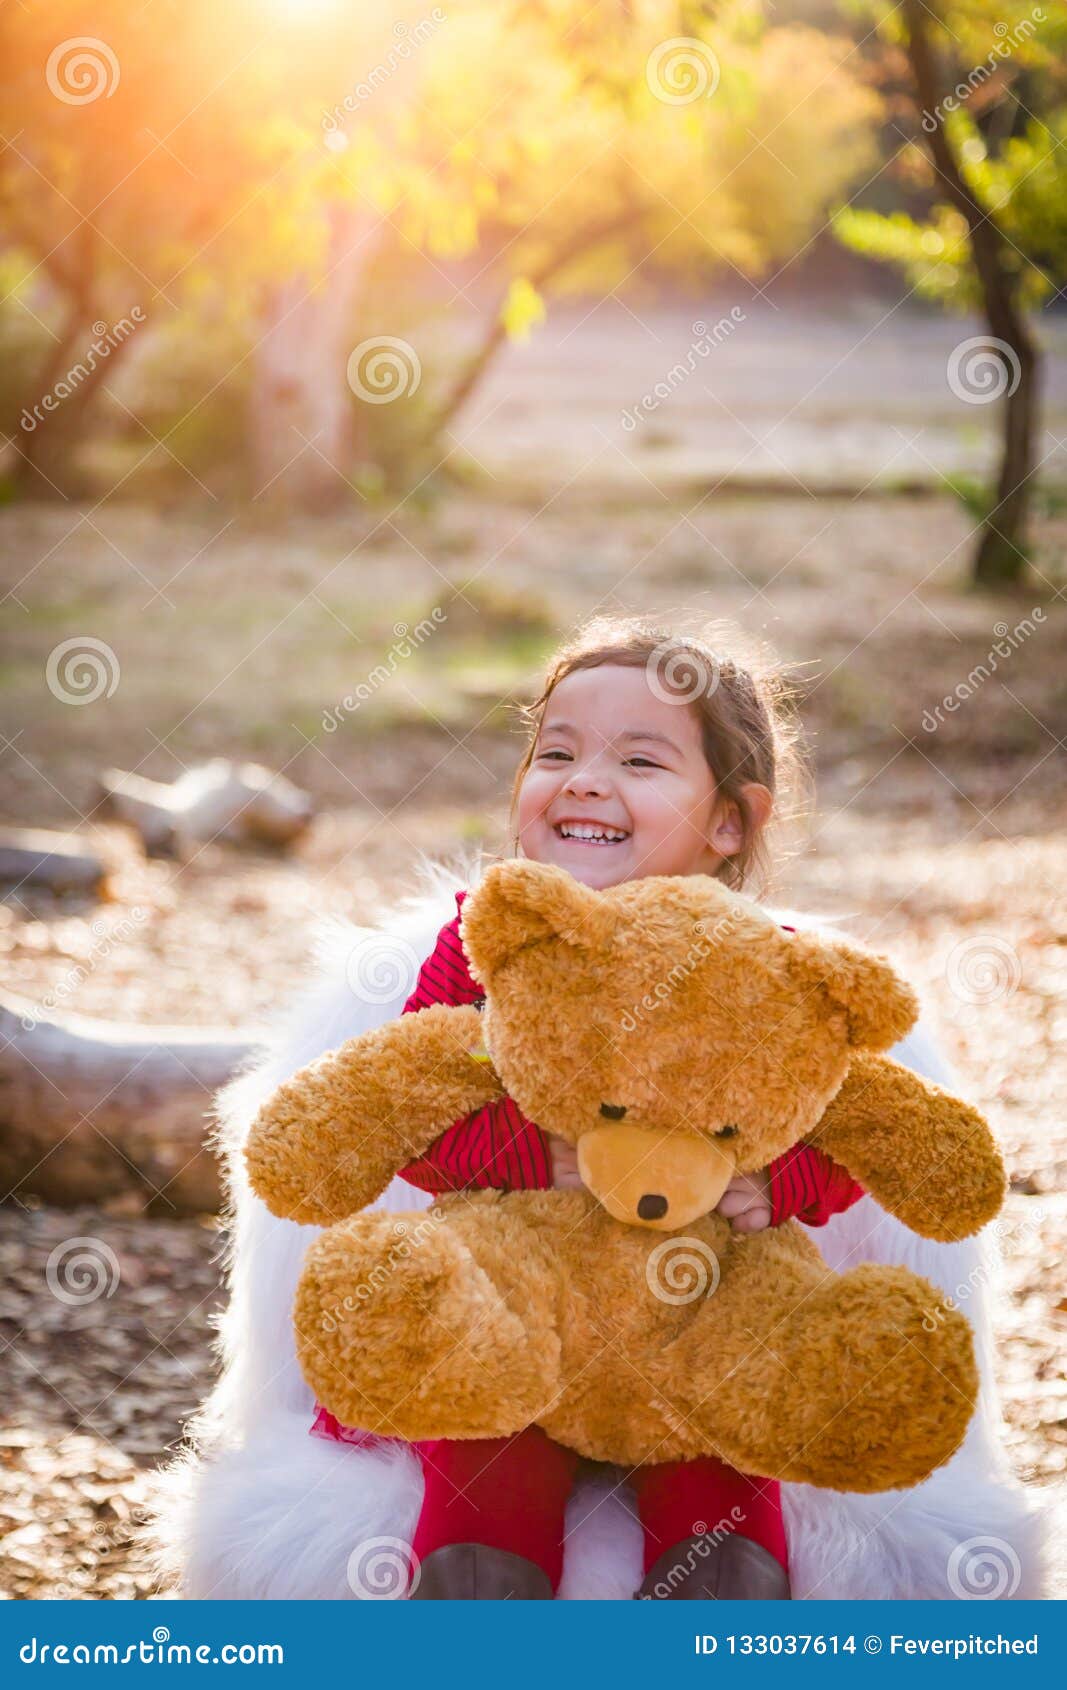 Cute Young Mixed Race Baby Girl Hugging Teddy Bear Outdoors Stock